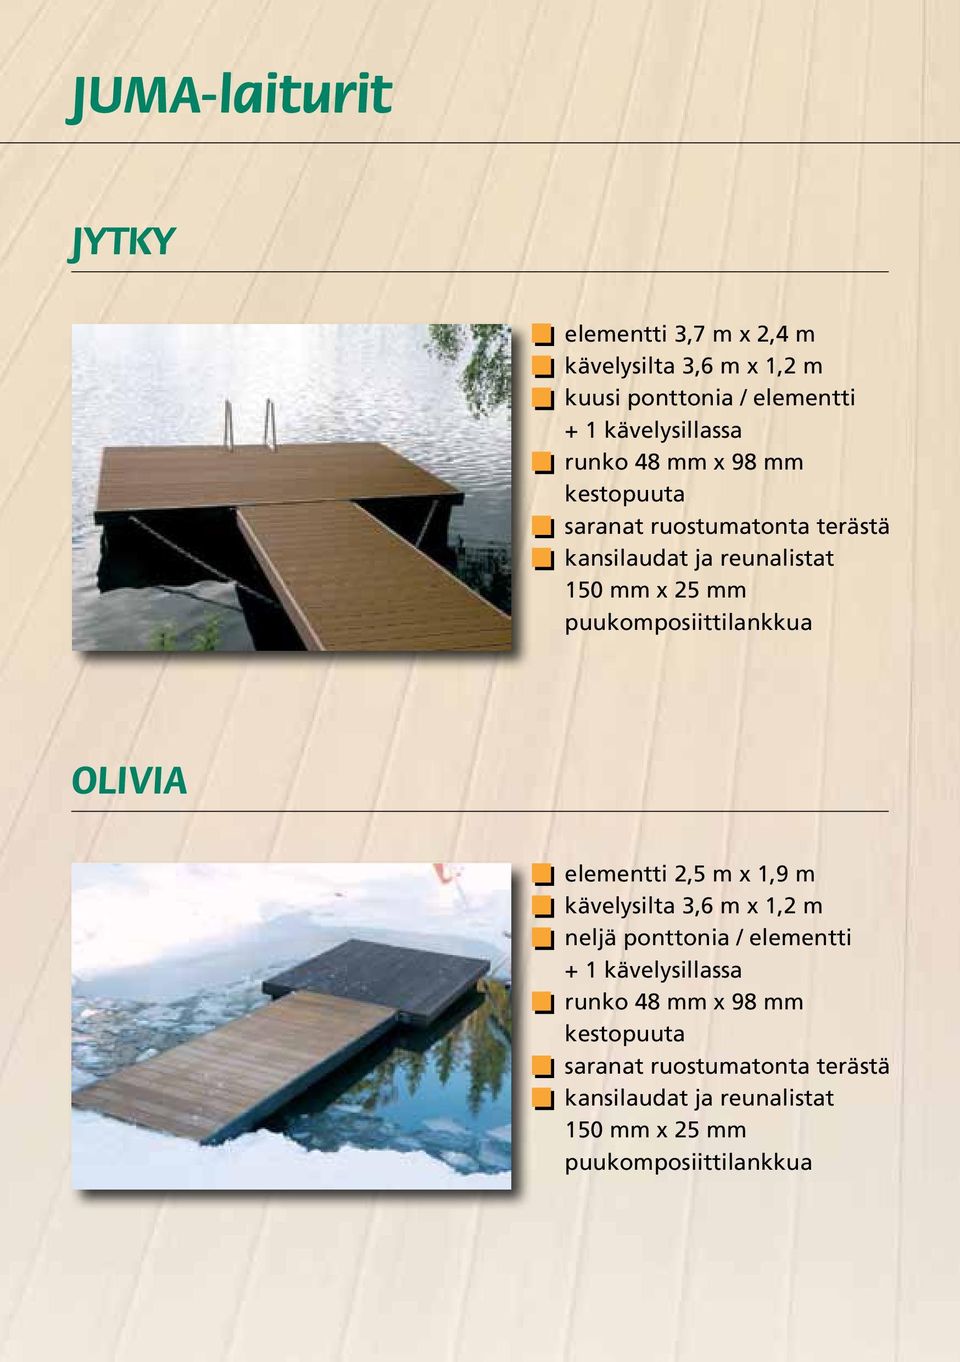 puukomposiittilankkua OLIVIA elementti 2,5 m x 1,9 m kävelysilta 3,6 m x 1,2 m neljä ponttonia / elementti + 1